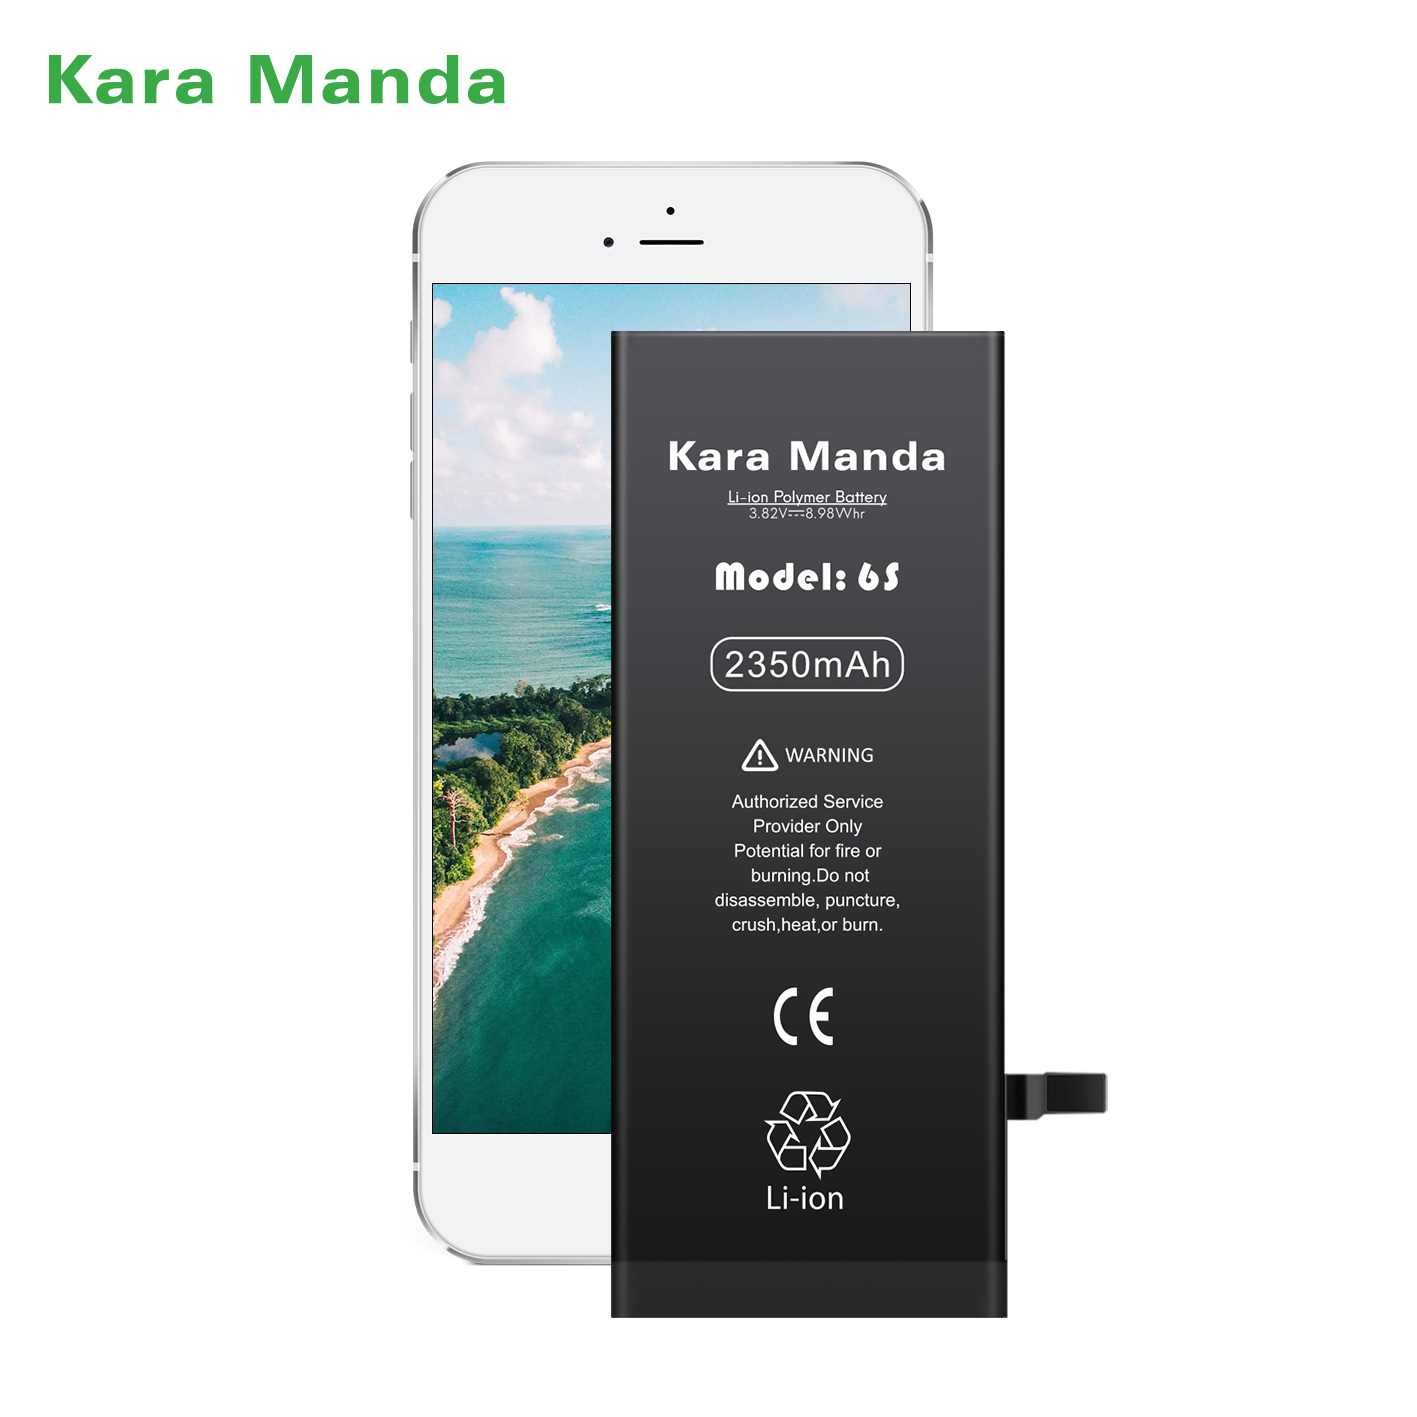 Factory Direct: High Capacity 2350mAh iPhone 6S Replacement Battery - <a href='/wholesale-oem/'>Wholesale OEM</a> | <a href='/kara-manda/'>Kara Manda</a>